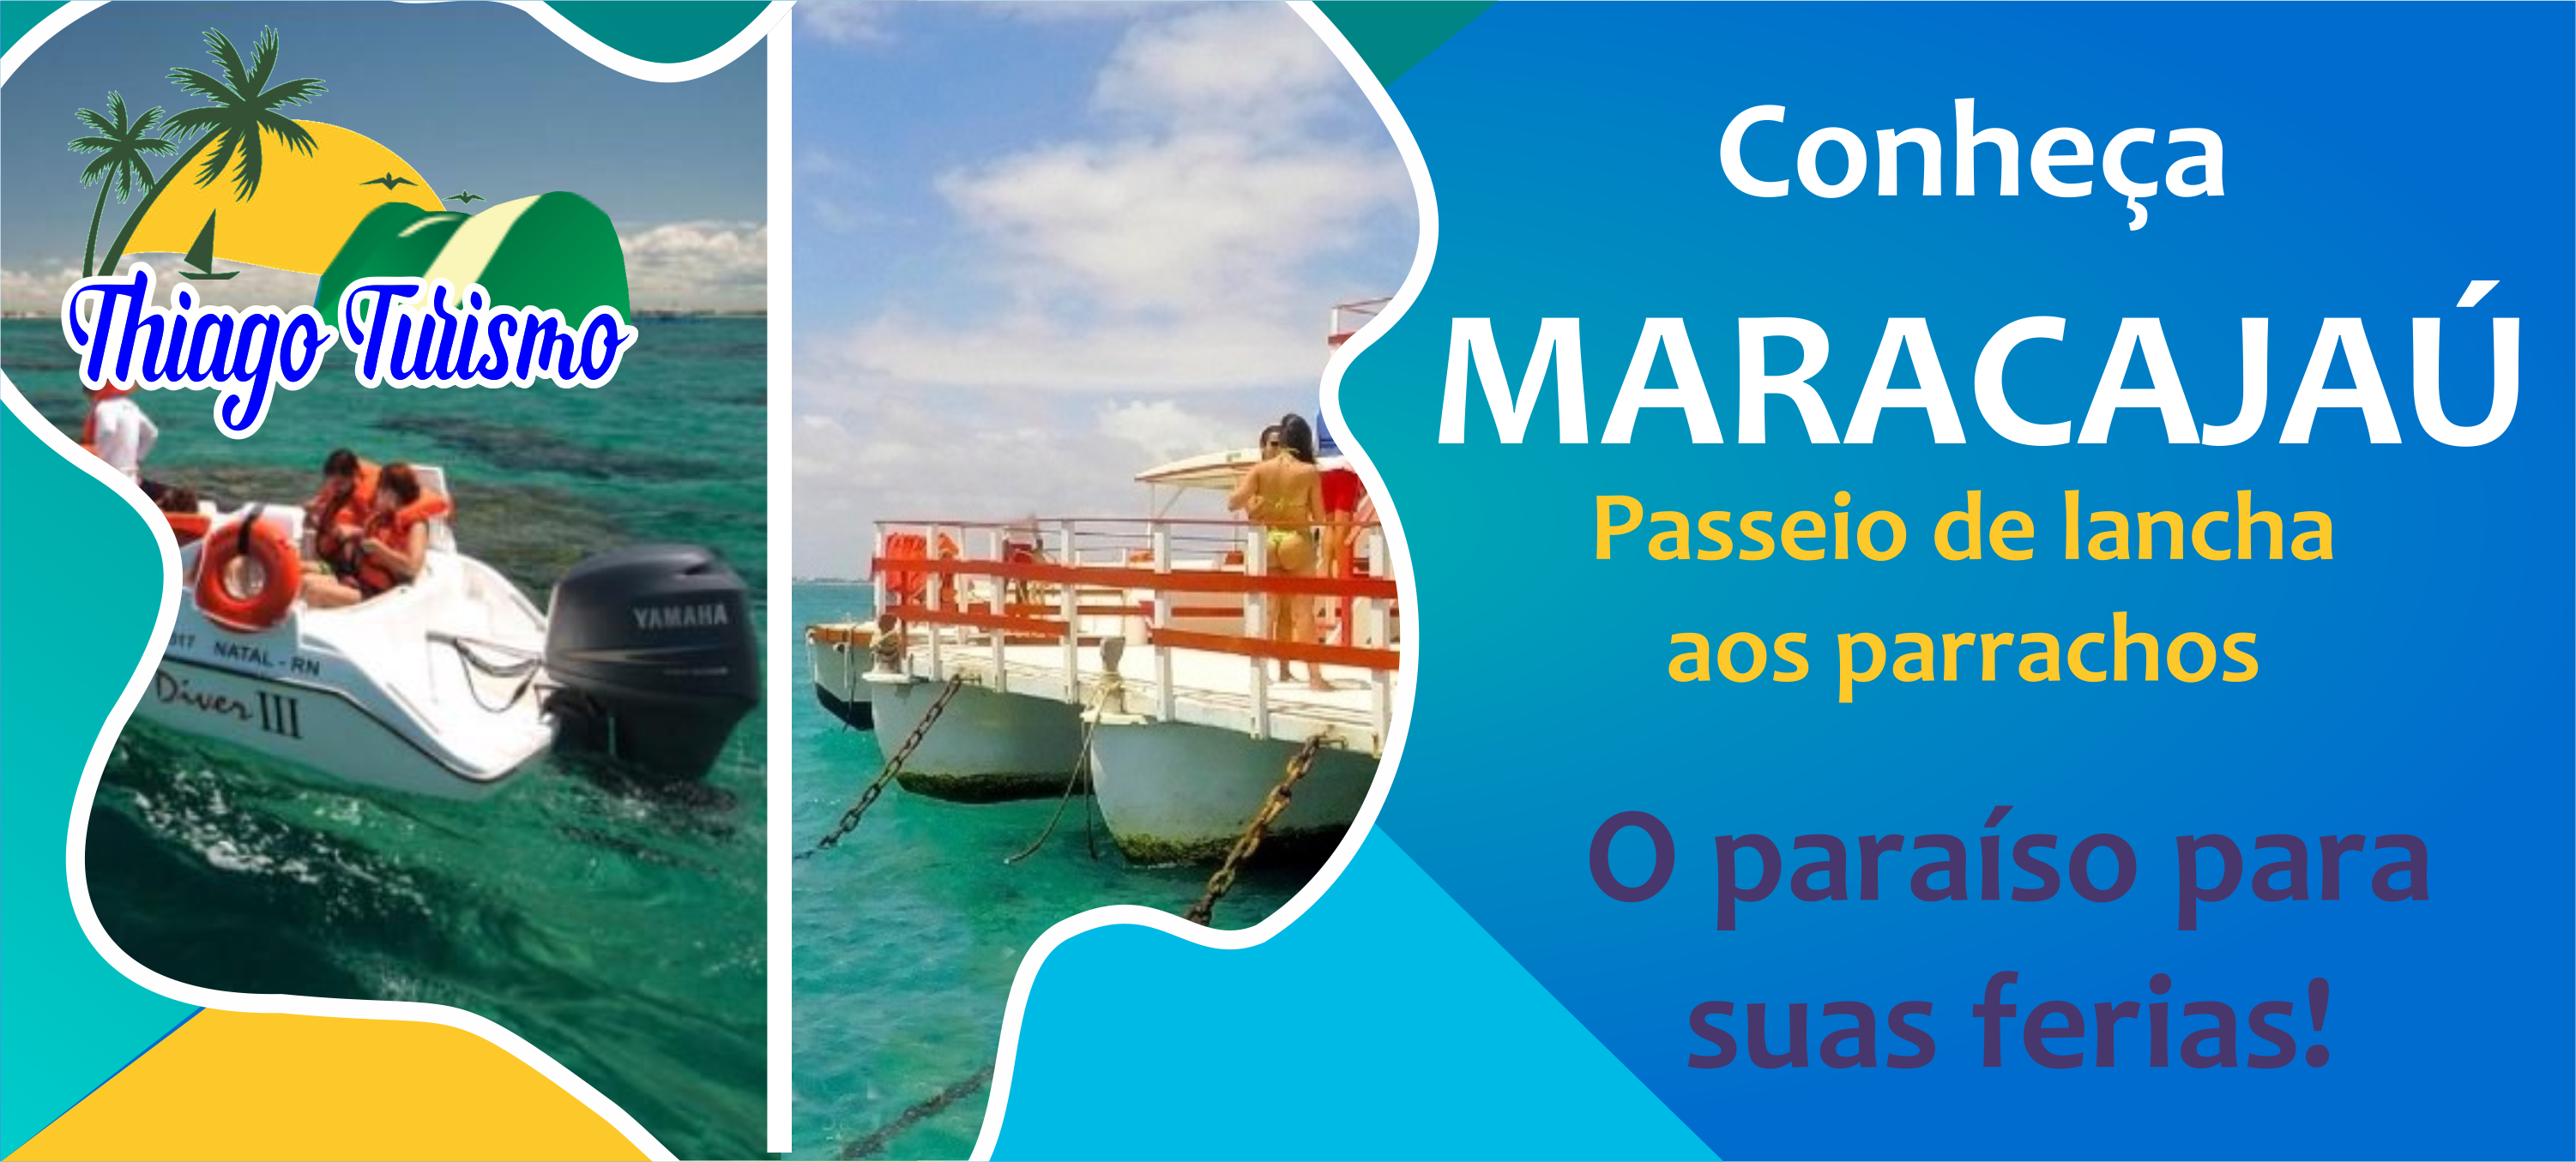 Maracajaú - Thiago Turismo